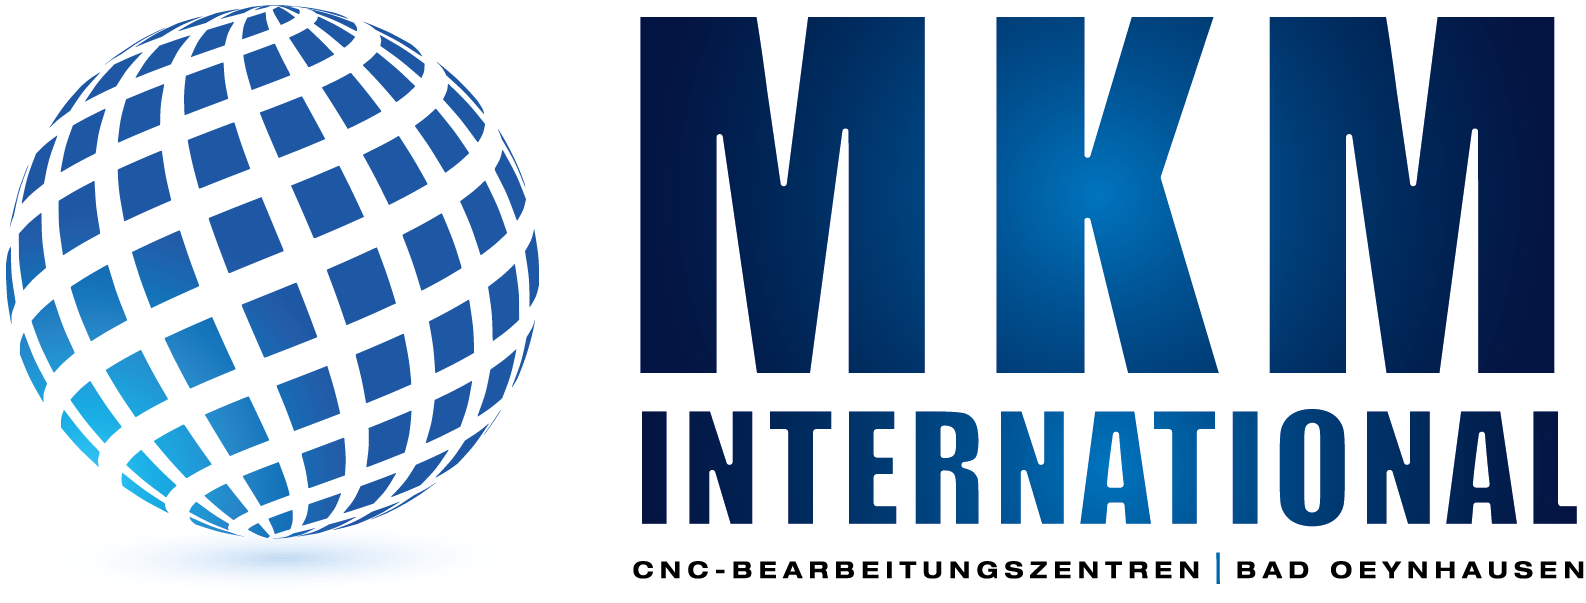 MKM International